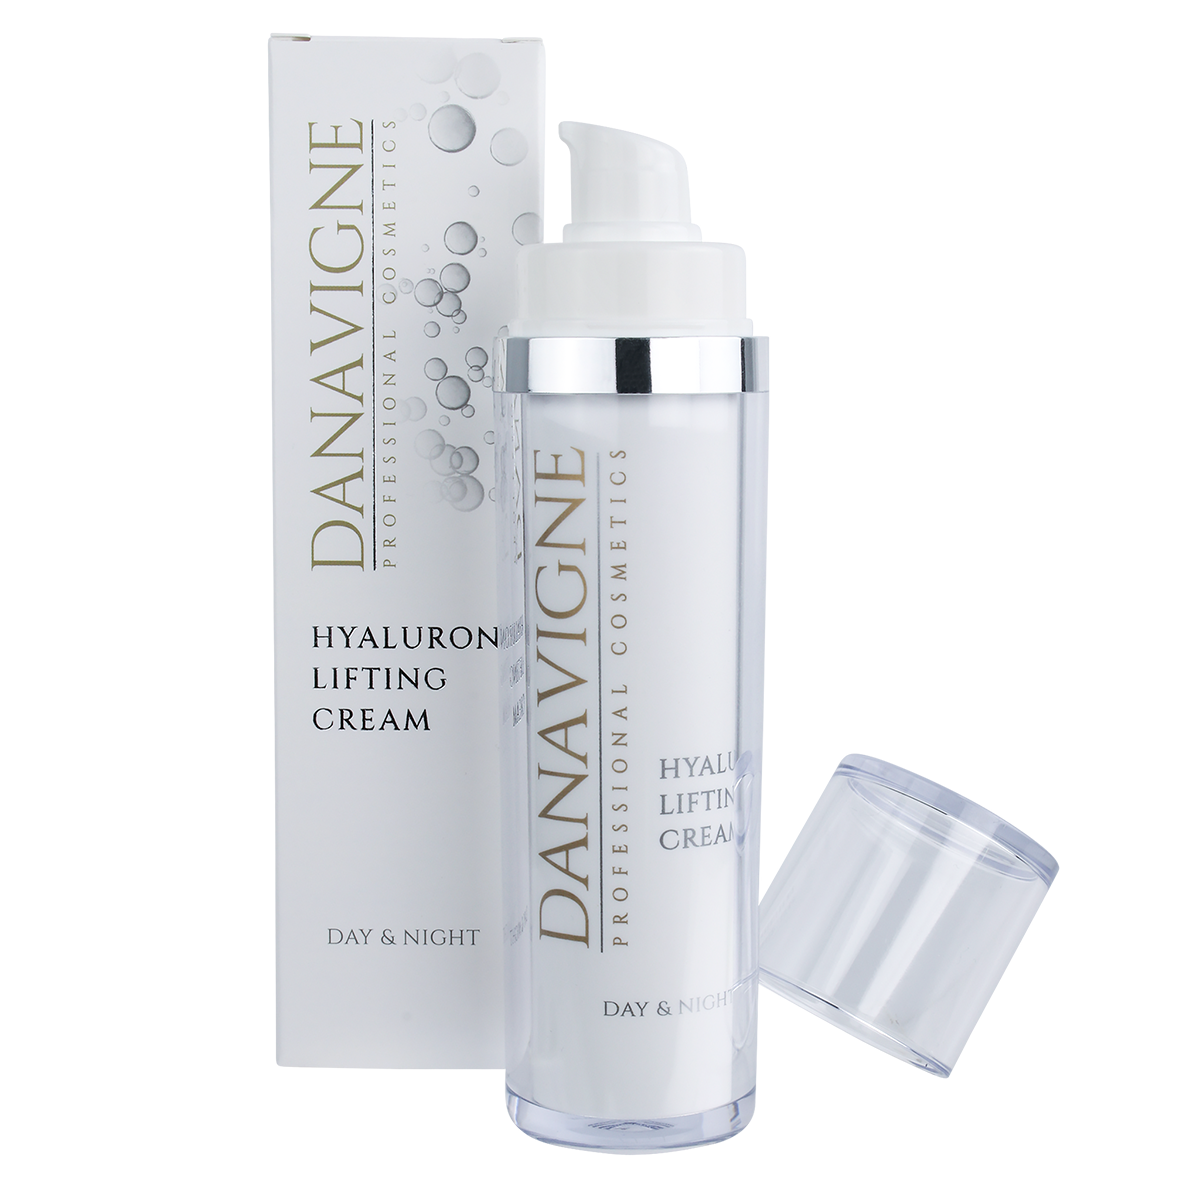 Danavigne Hyaluron Lifting Cream